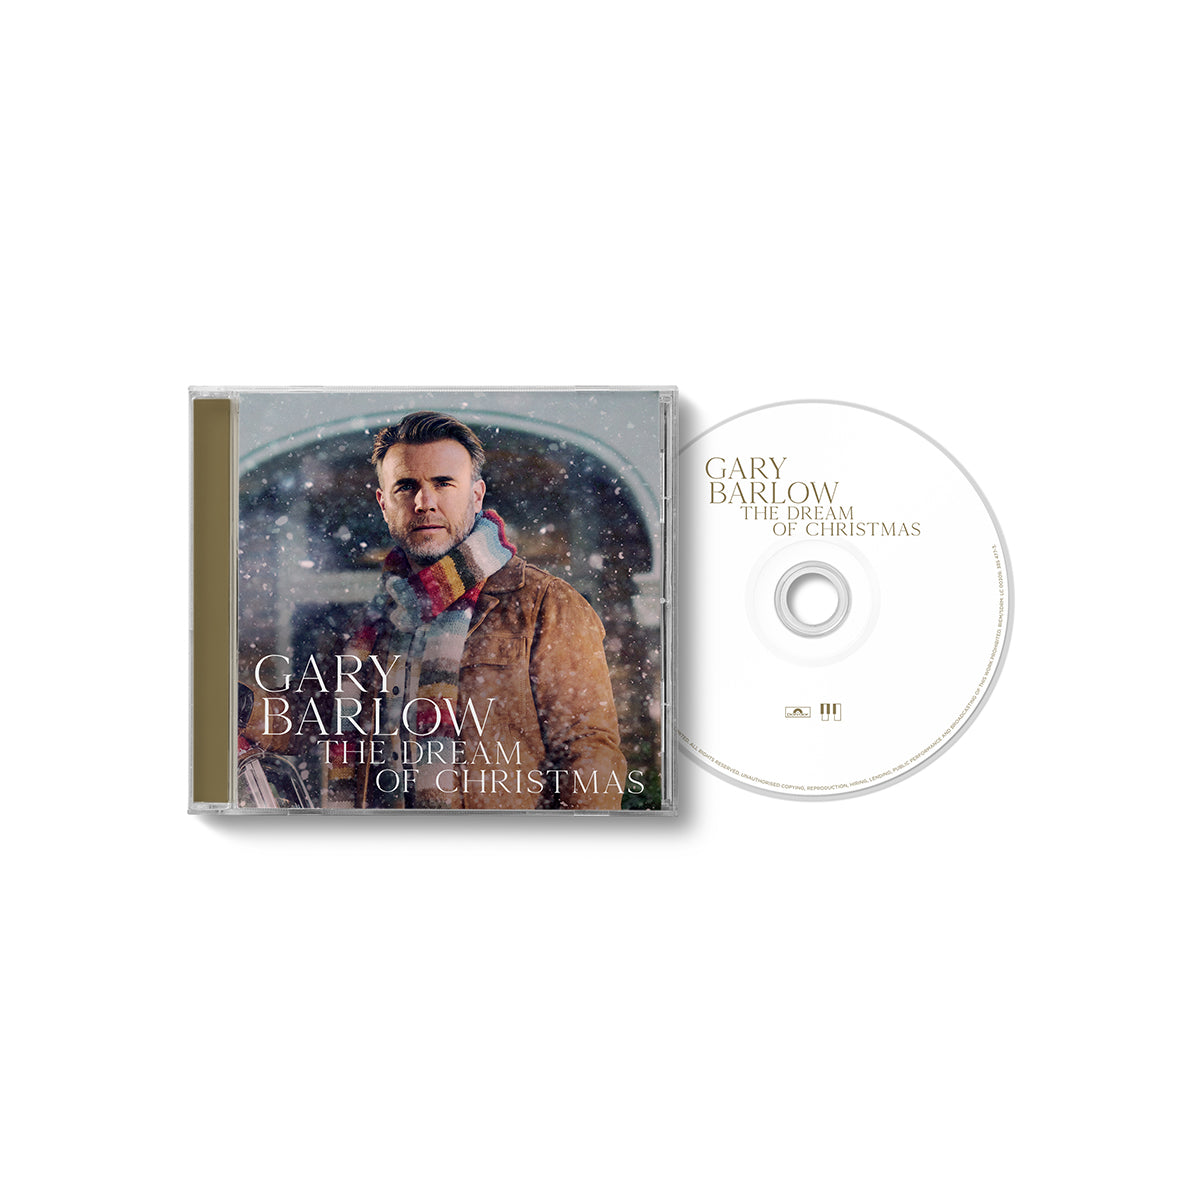 Gary Barlow - THE DREAM OF CHRISTMAS Standard CD